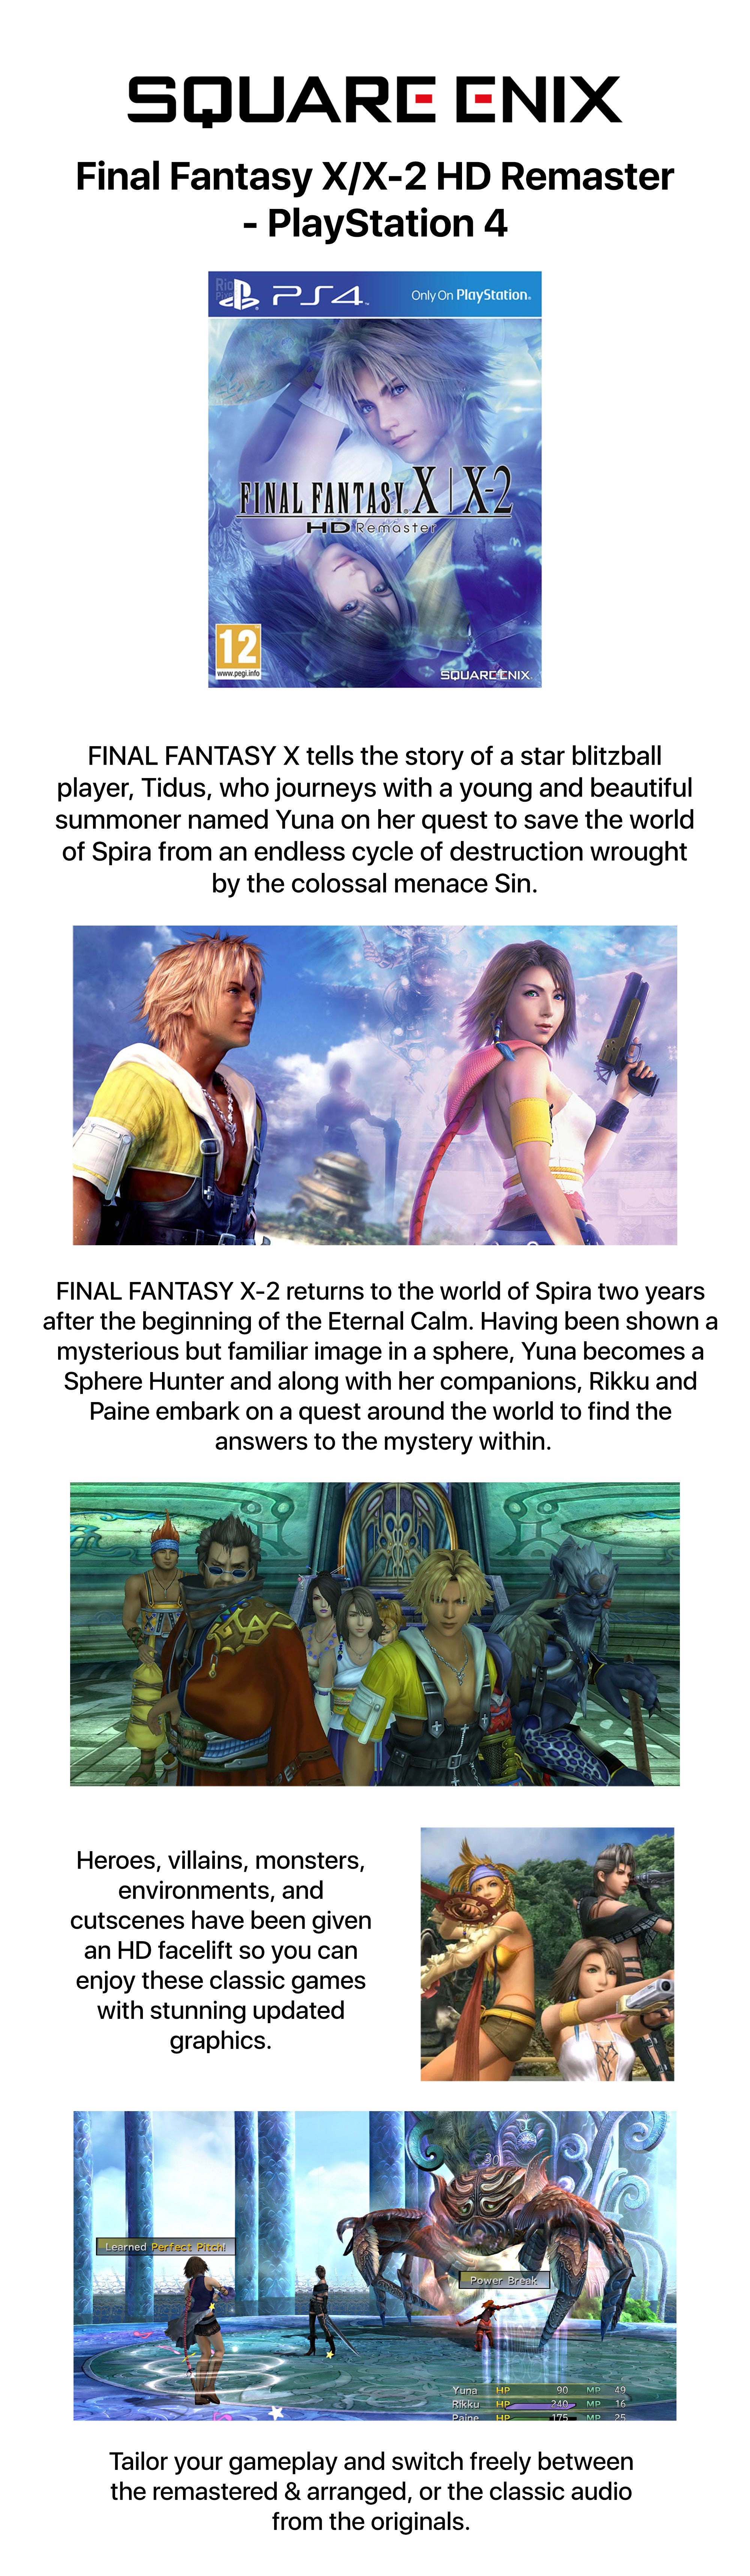 Final Fantasy X/X2 : HD Remaster (Intl Version) - Adventure - PlayStation 4 (PS4)